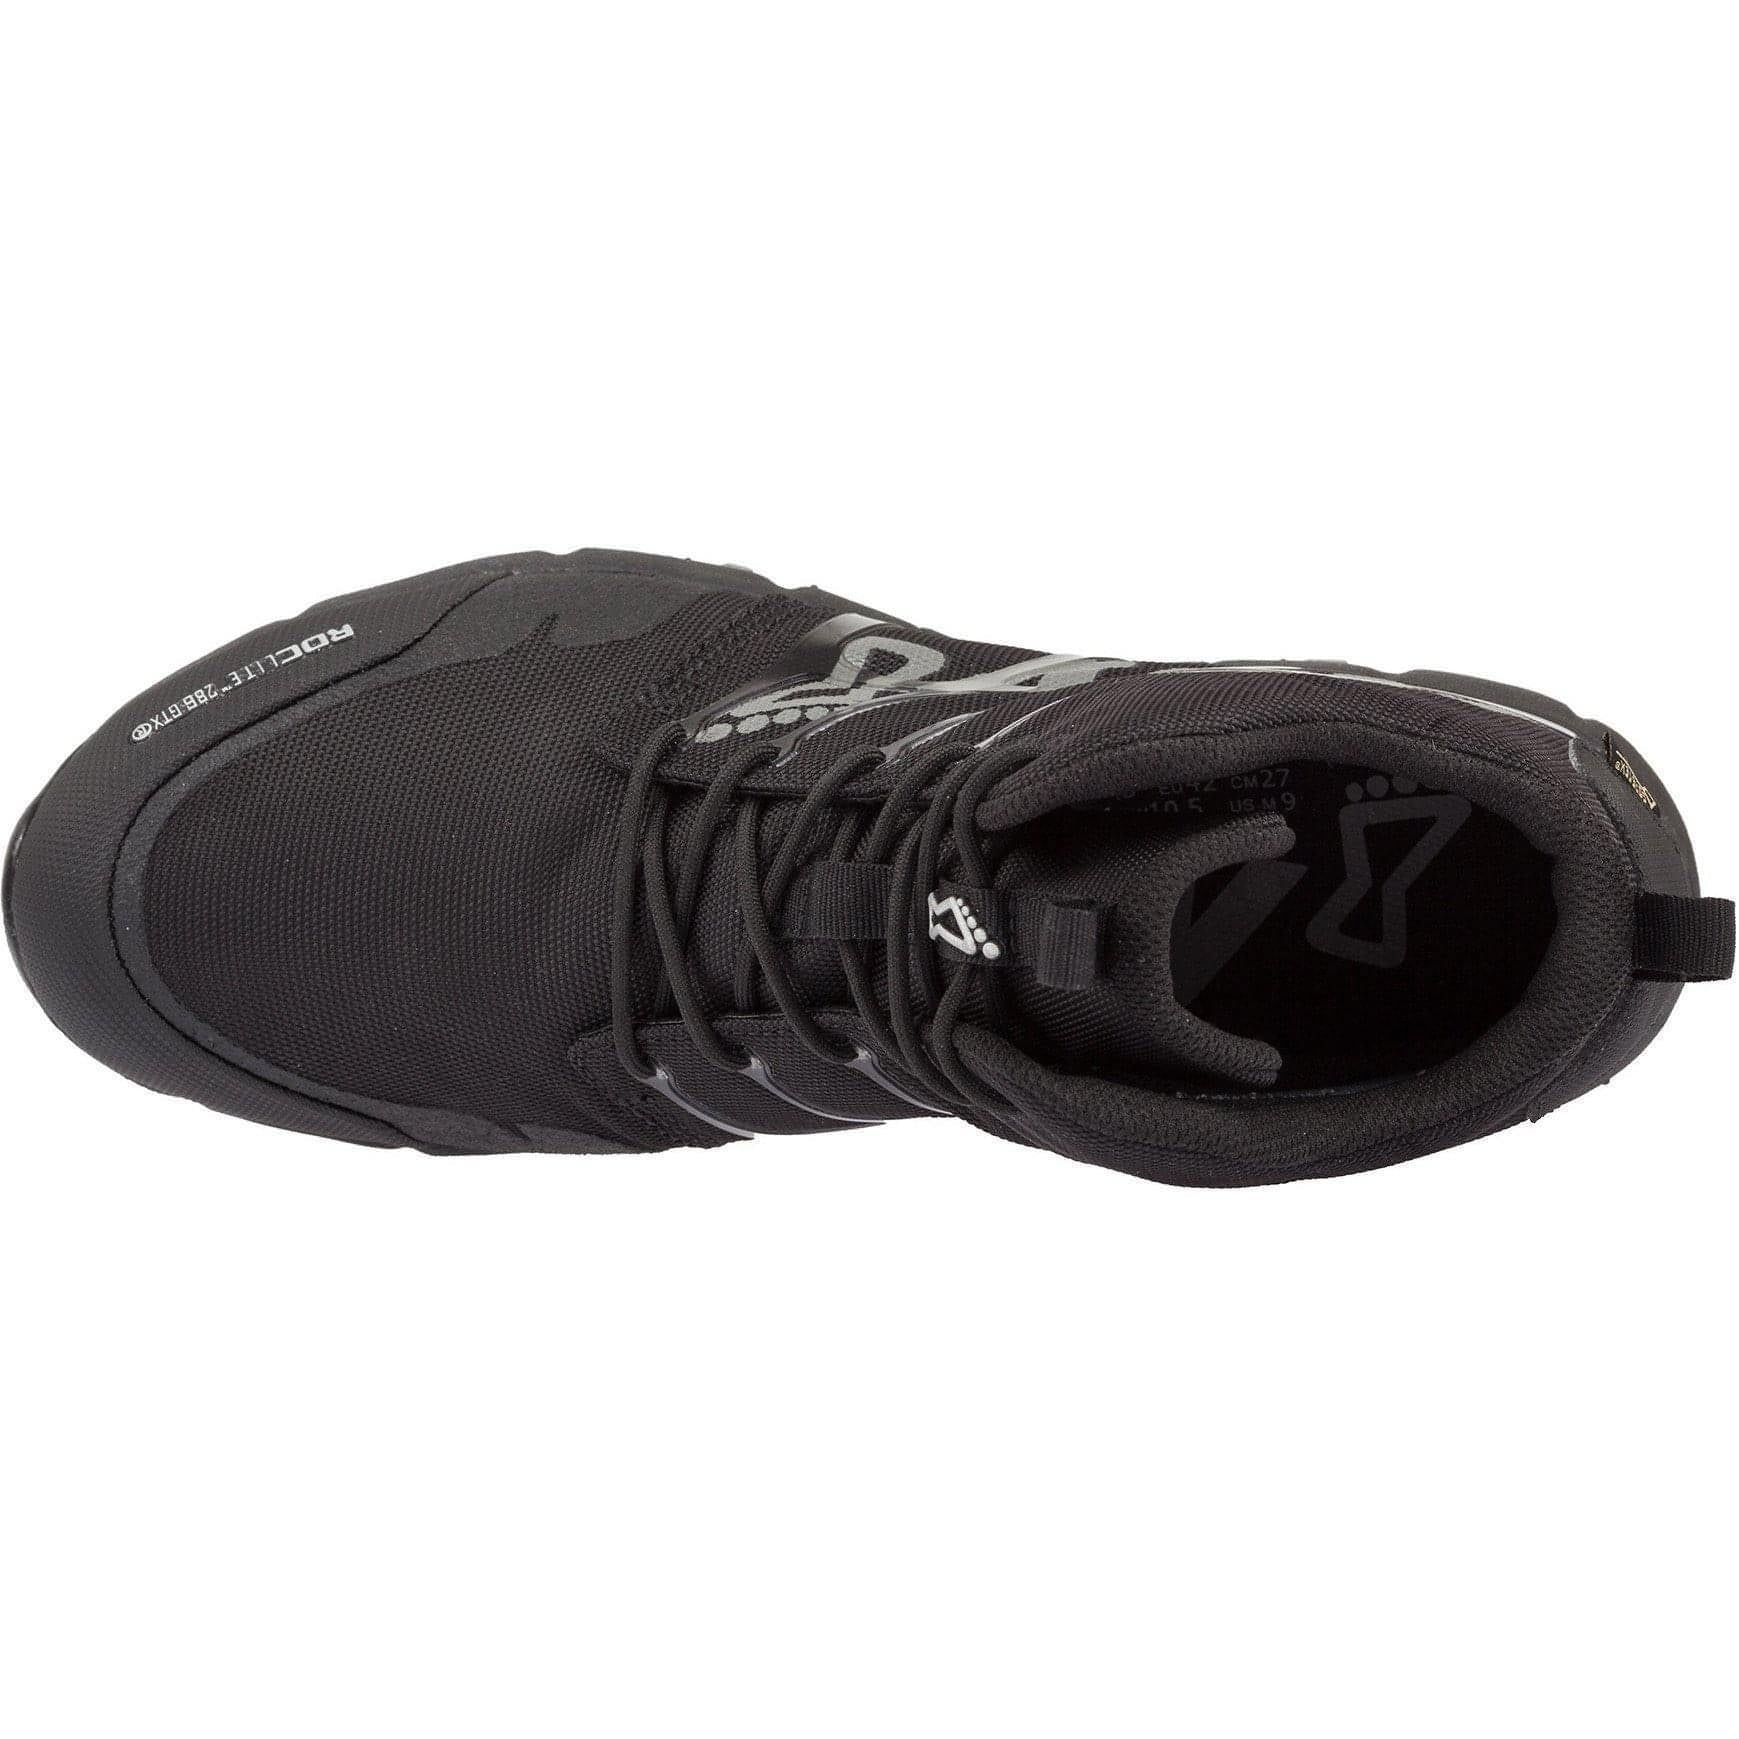 Inov8 Roclite G 286 GTX Mens Walking Boots - Black - Start Fitness